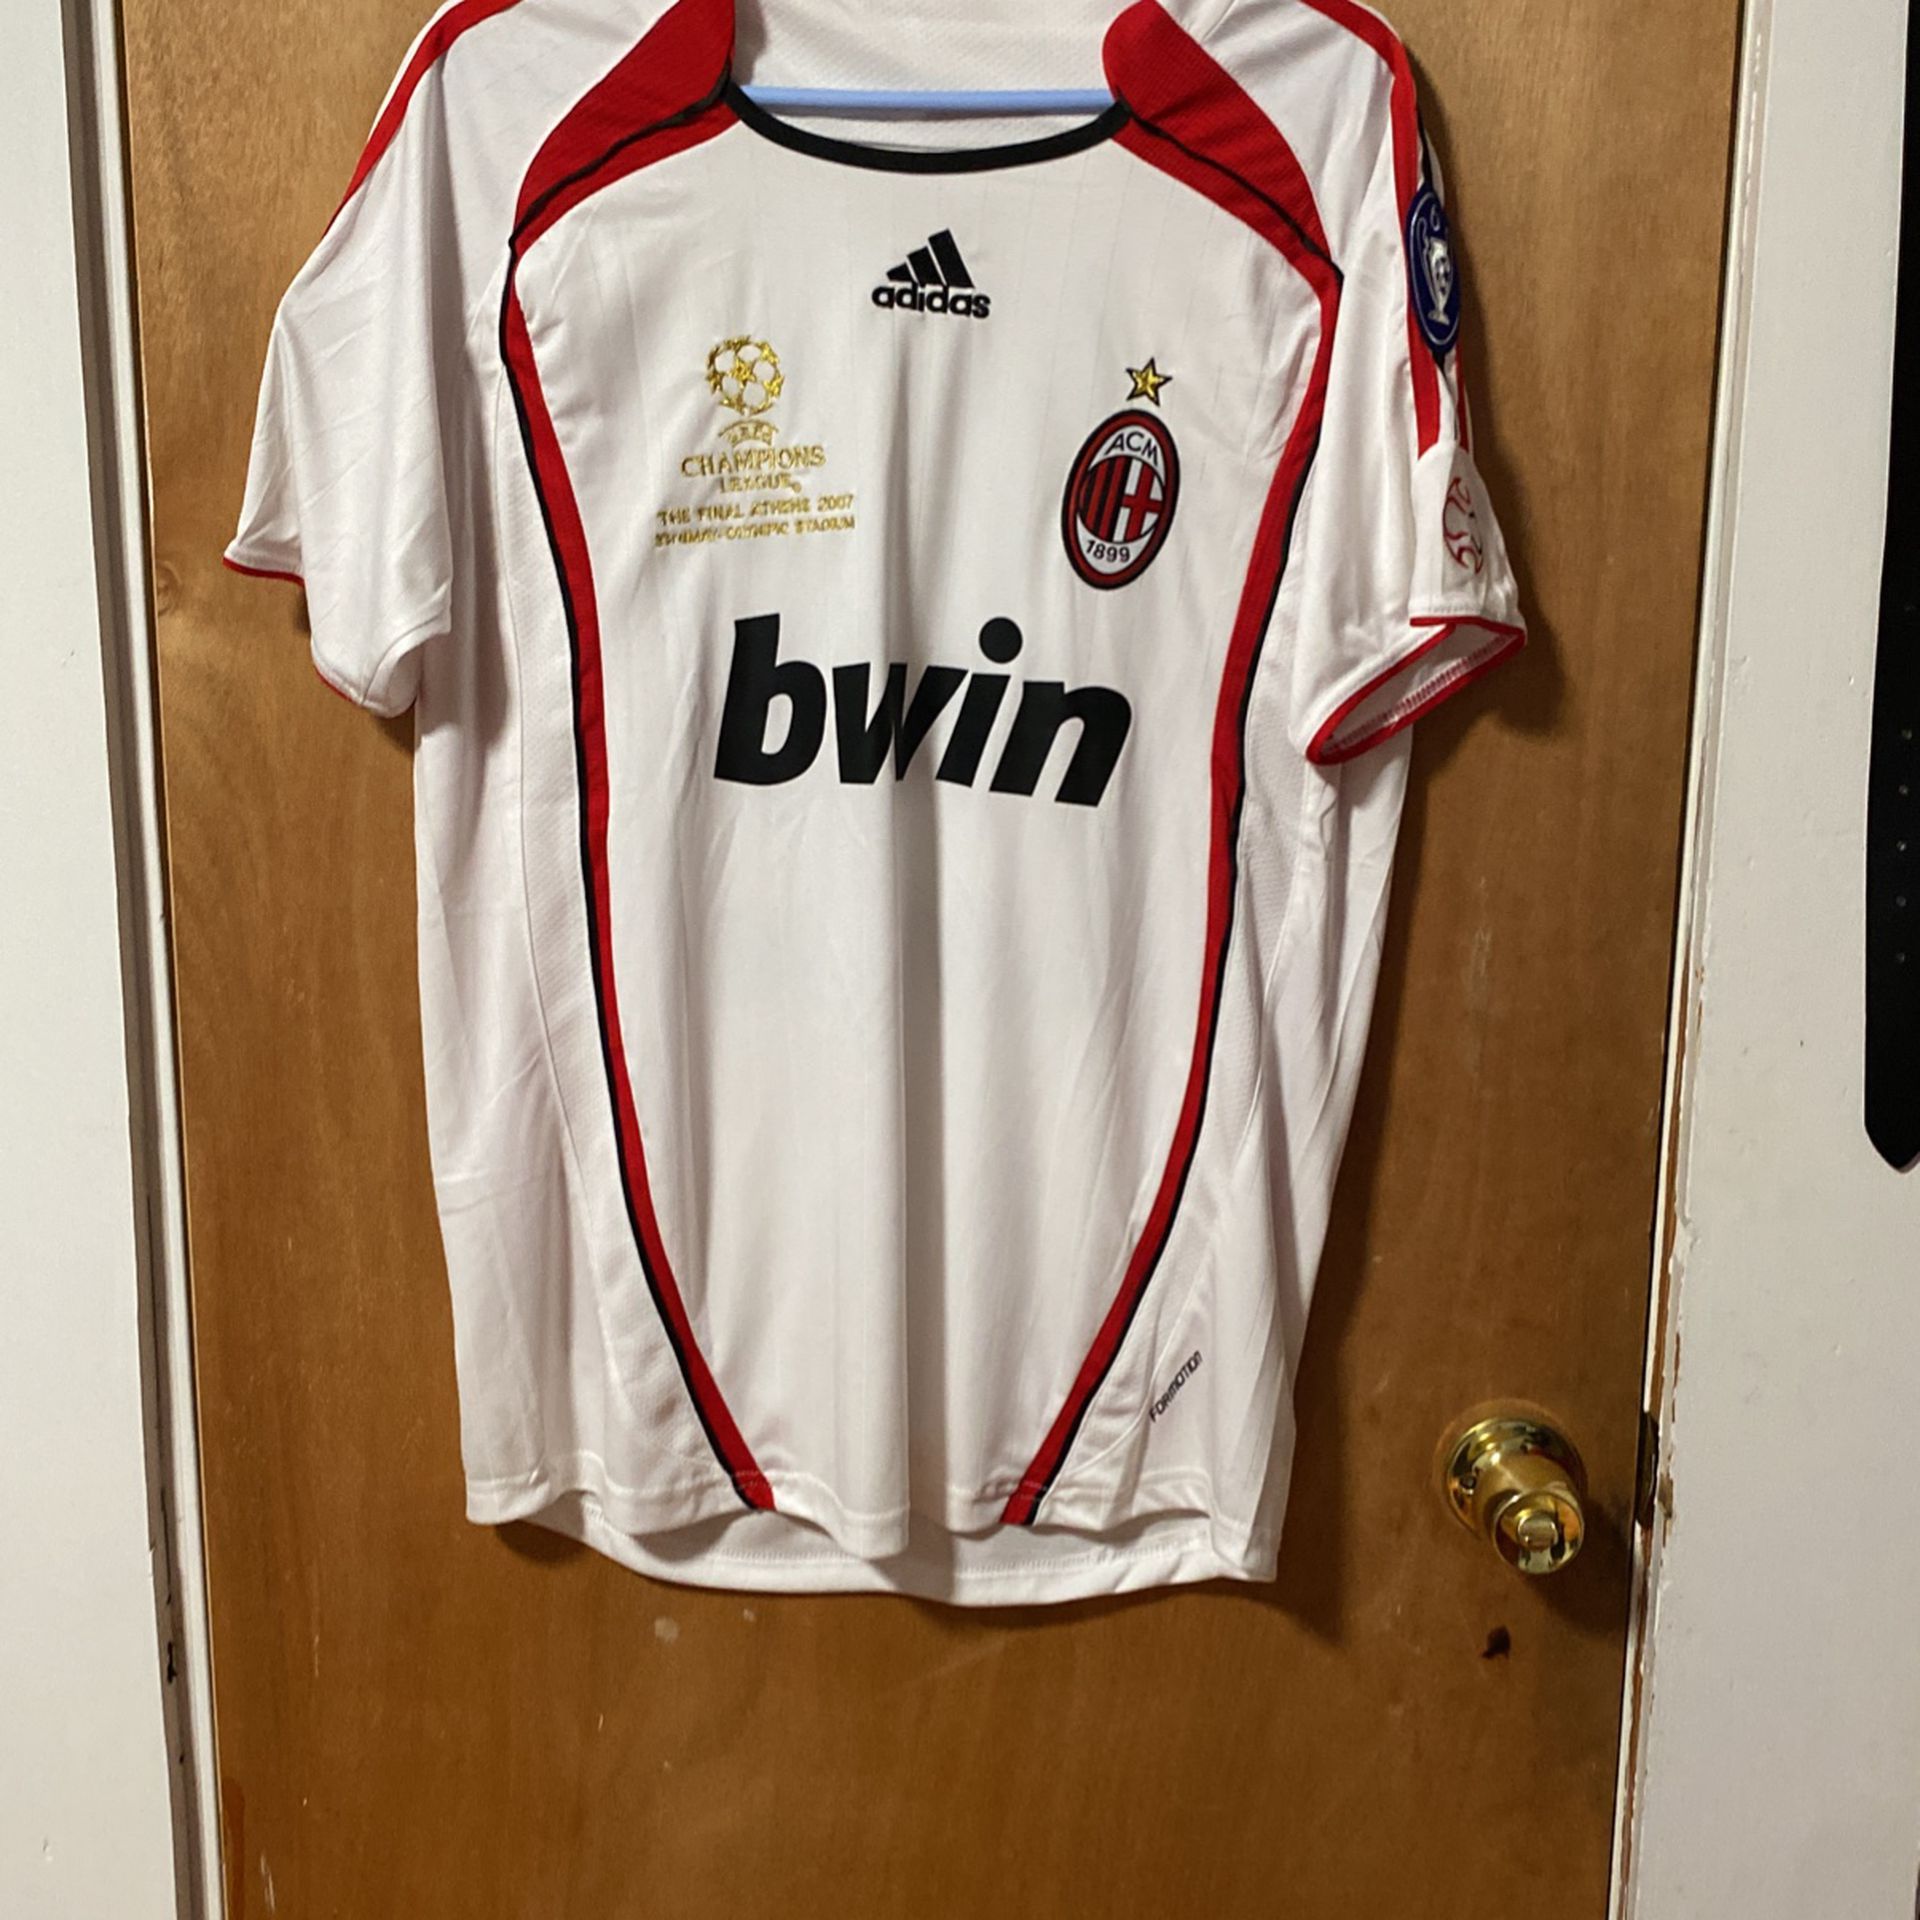 2006-2007 AC Milan Champions League Final jersey